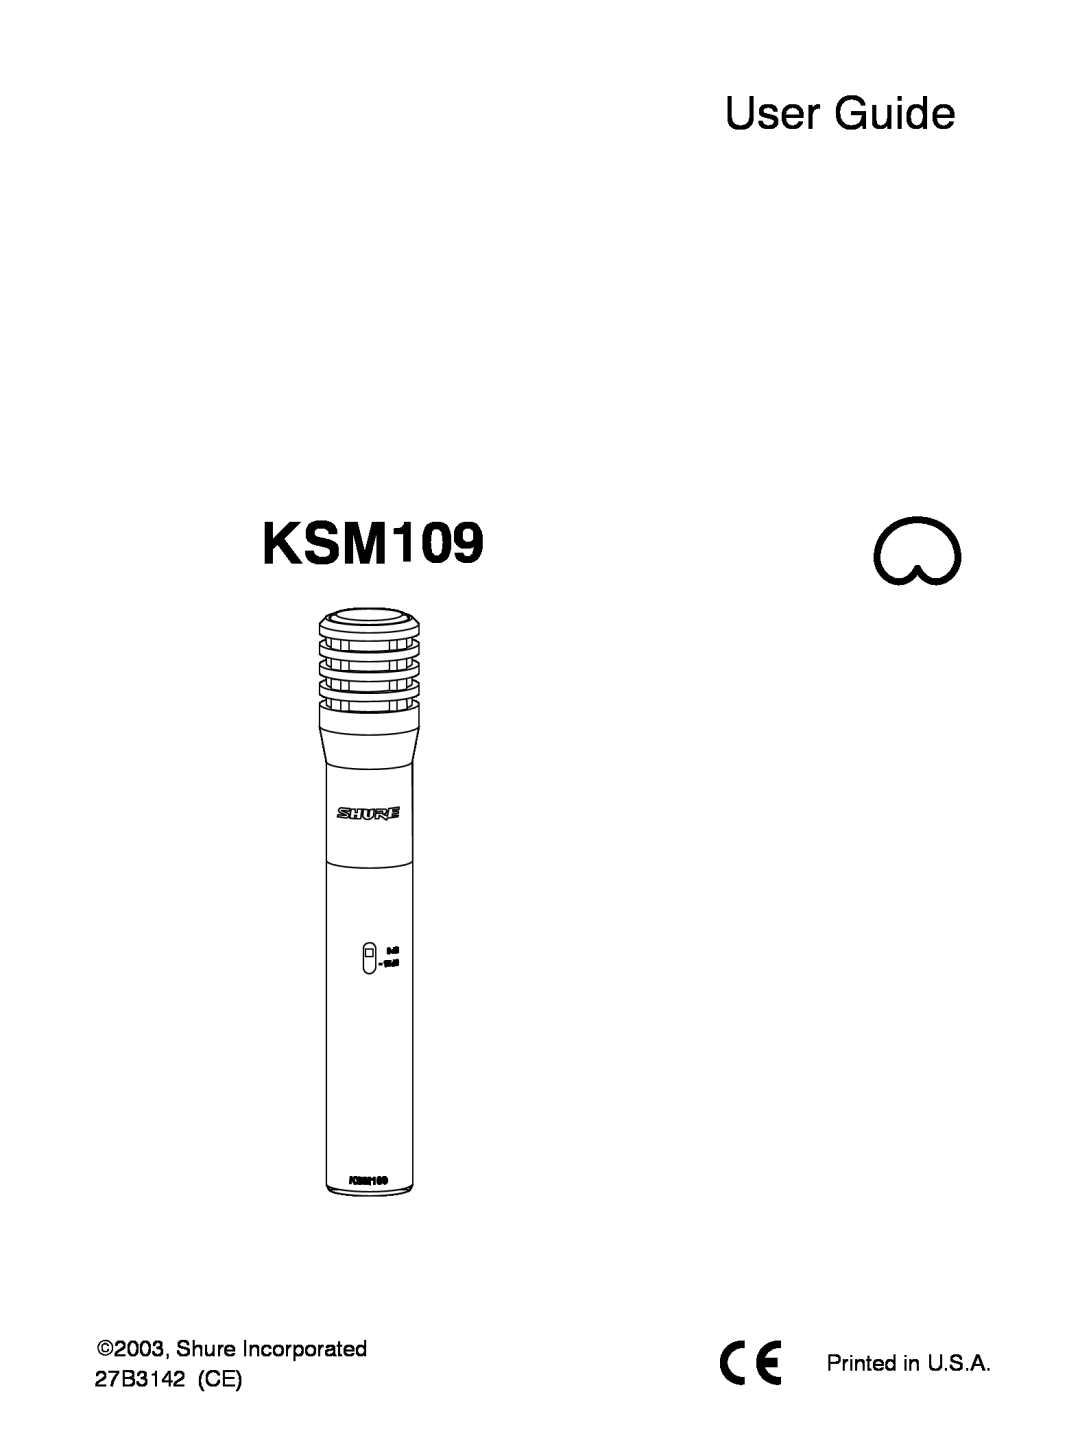 Shure KSM109 manual User Guide 